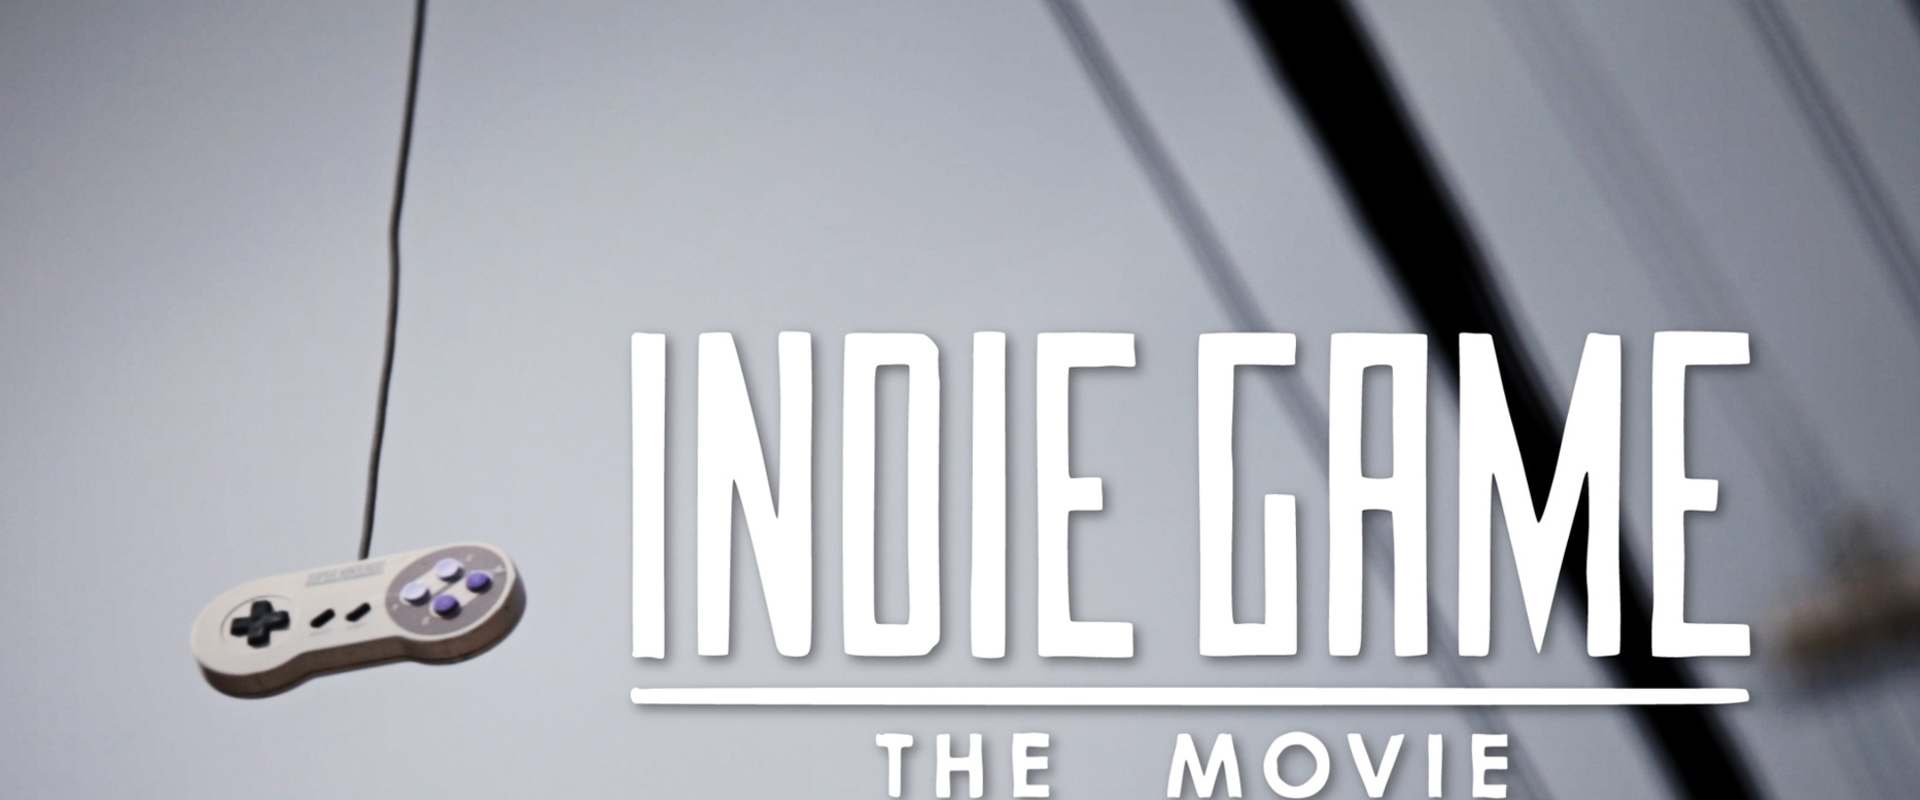 Indie Game: The Movie background 1